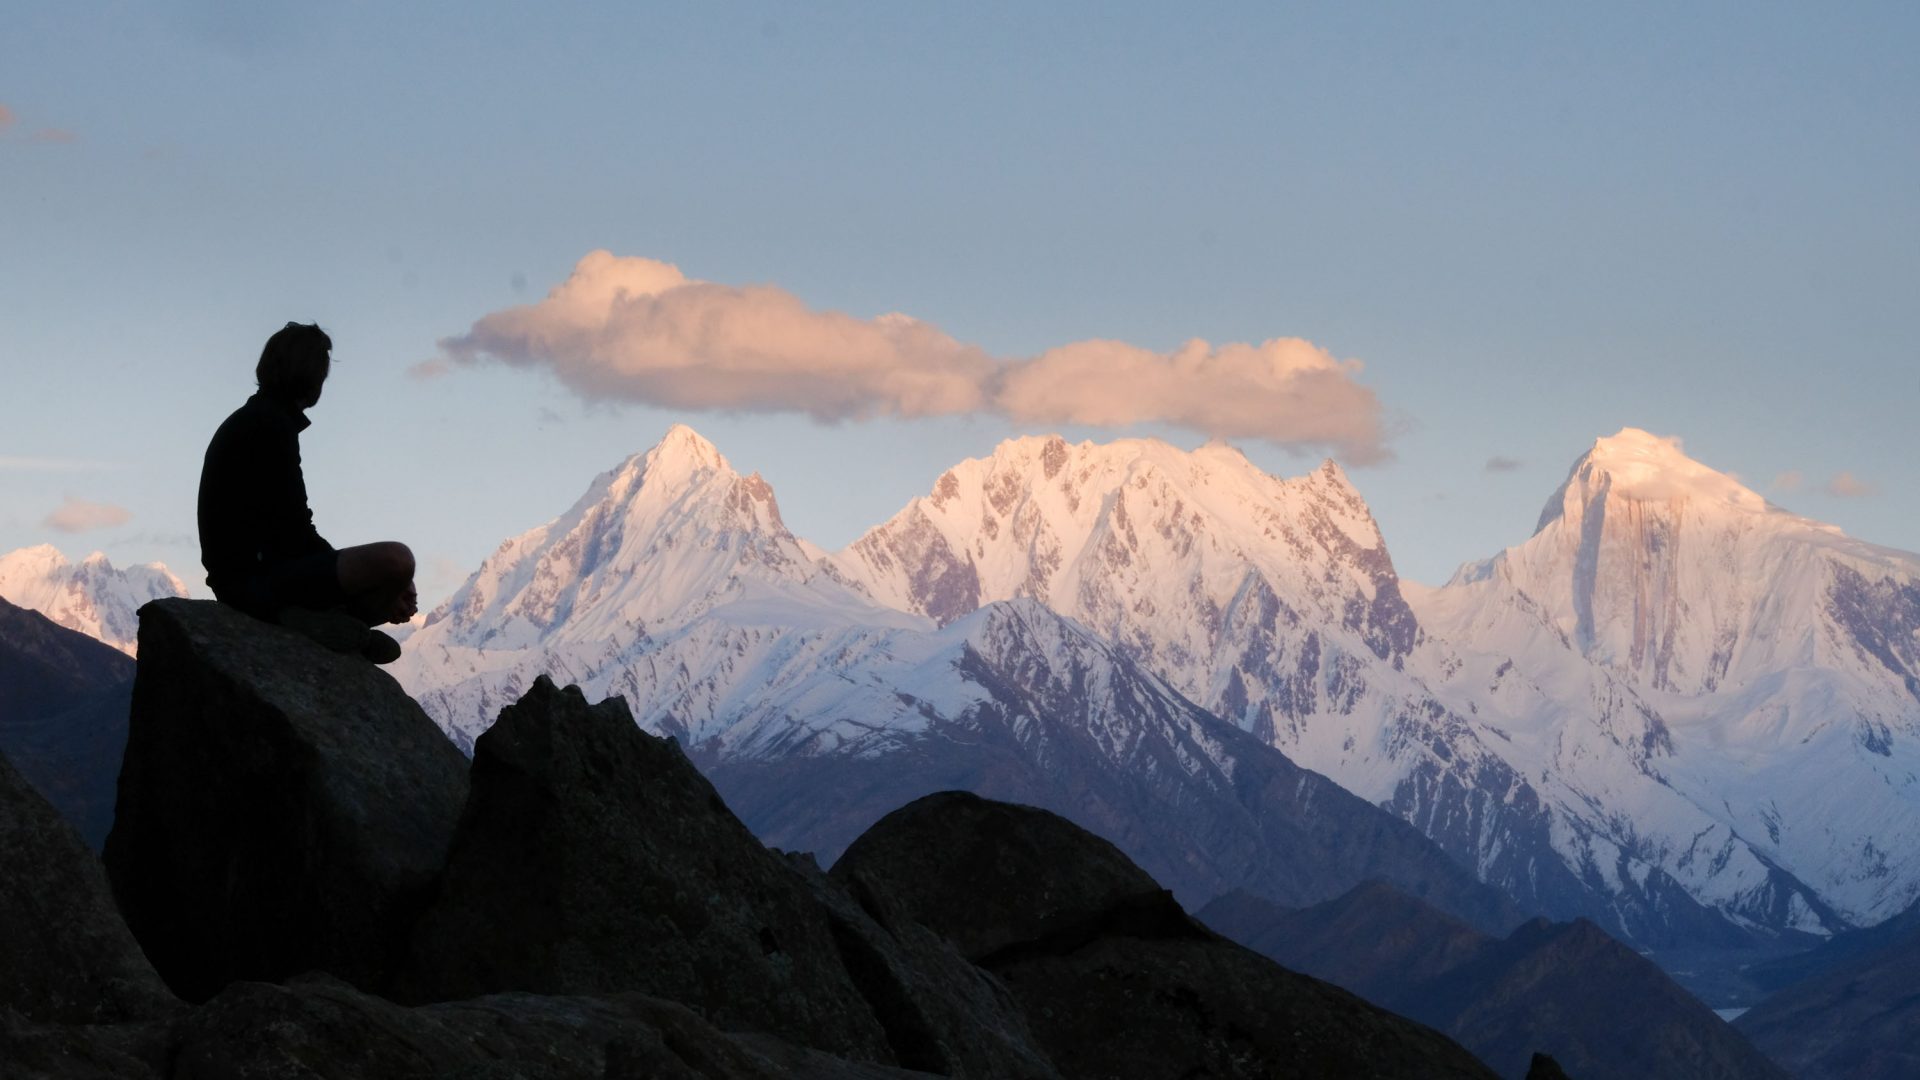 Silhouette against the stunning mountains of the Karokoram range in Pakistan.